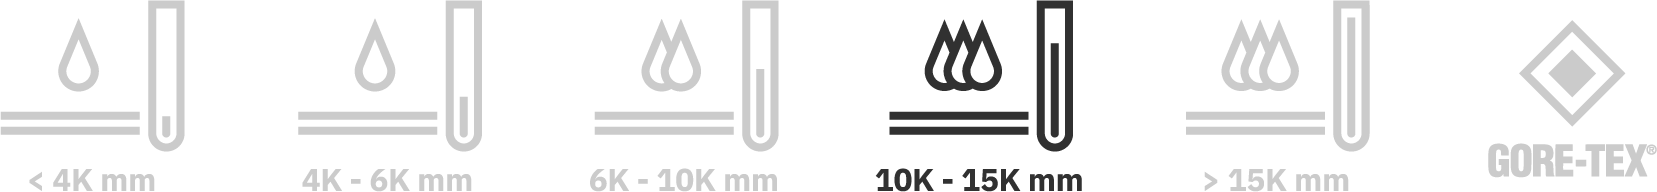 10001 - 15000 mm